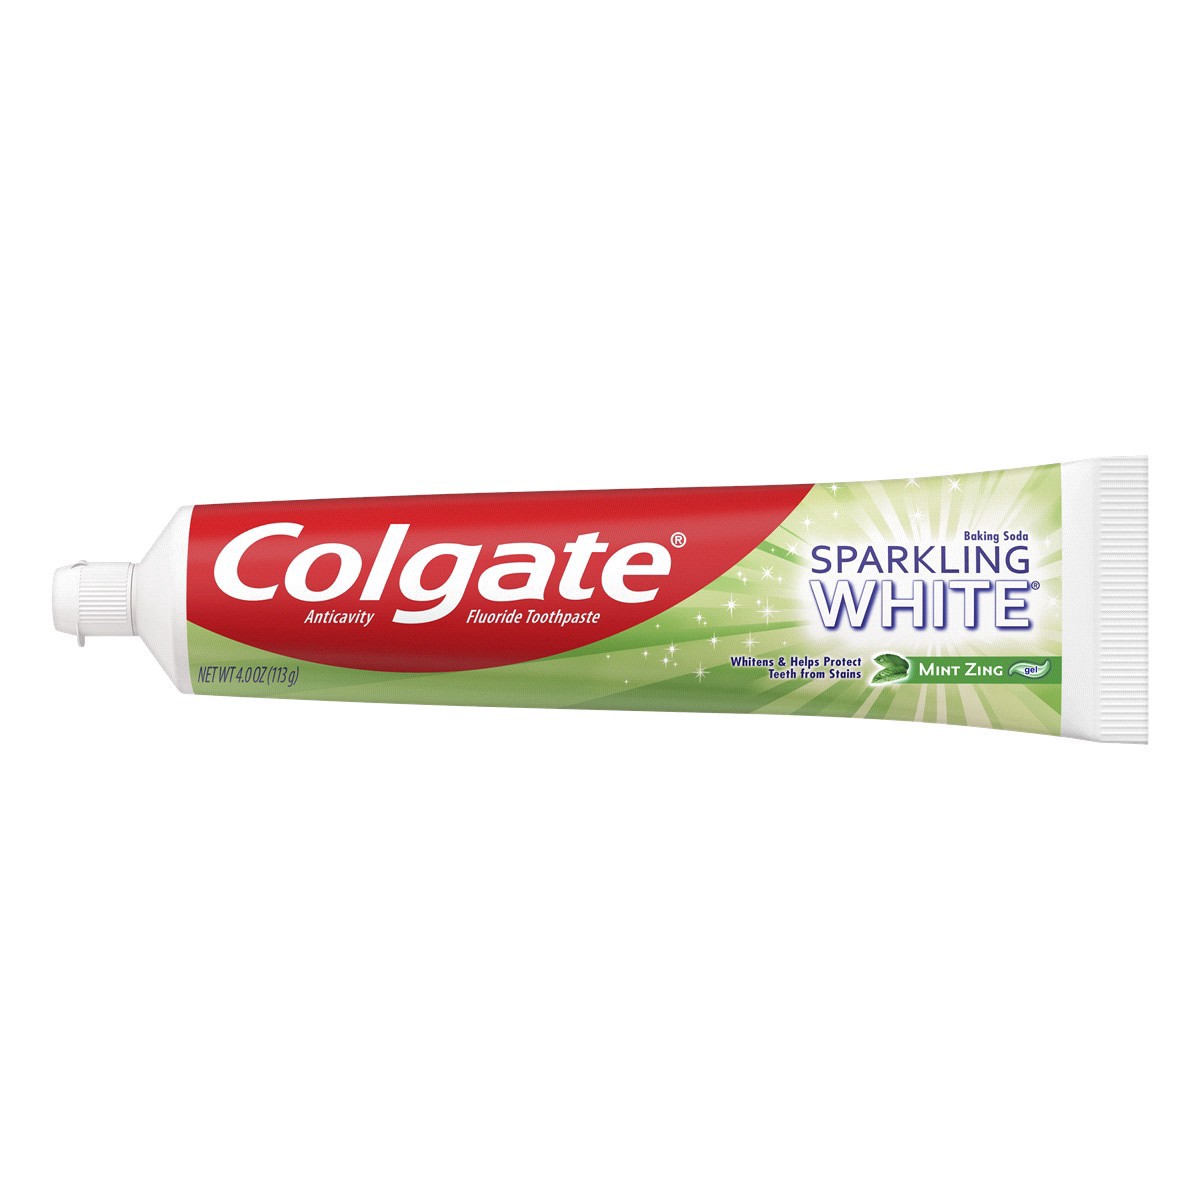 slide 17 of 17, Colgate Sparkling White Mint Zing Toothpaste, 4 oz